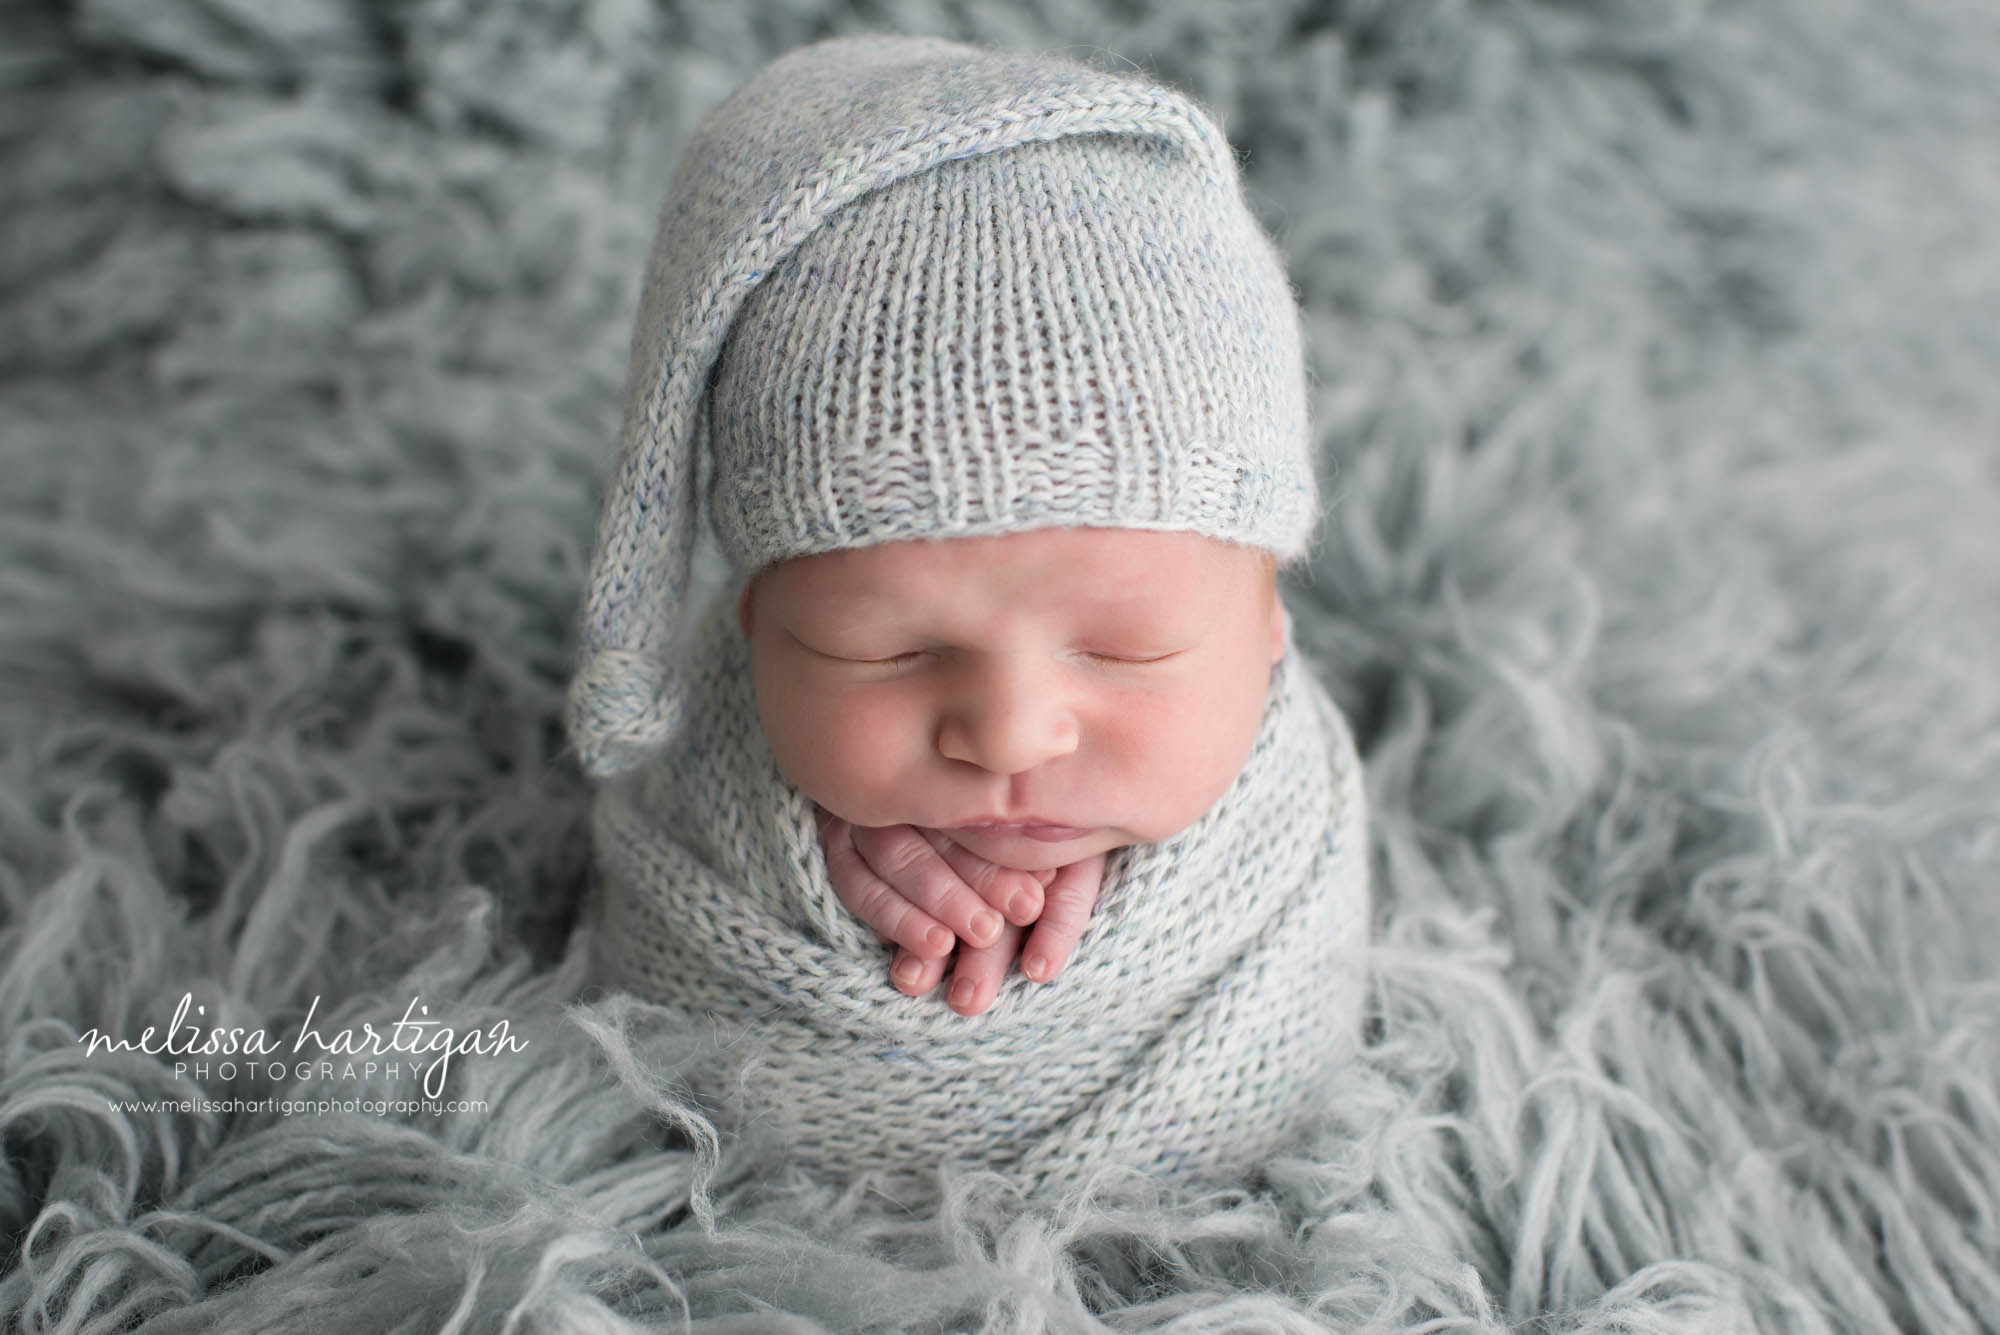 Melissa Hartigan Photography Newborn Photographer Connecticut baby boy wearing blue knit hat and matching wrap sleeping on a blue flokati rug